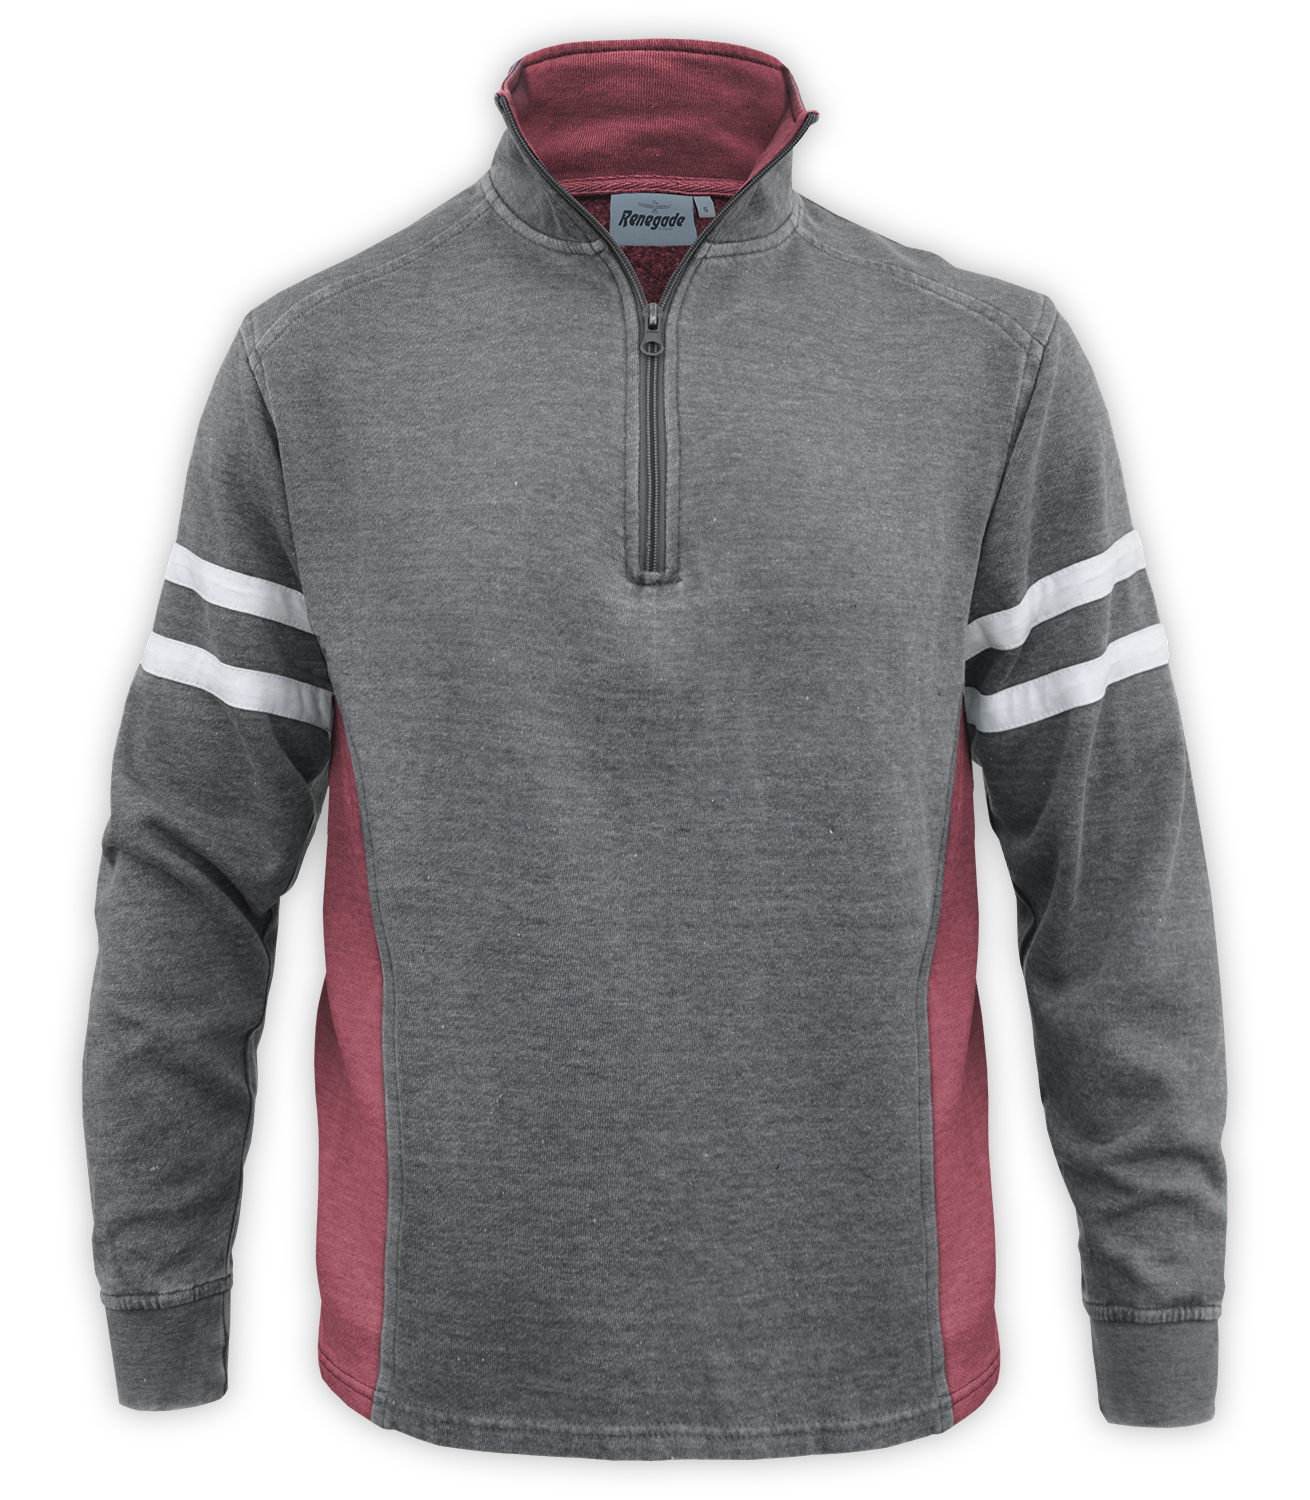 Renegade club brand men's burnout pullover, half zip, quarter zip, gray, red, cardinal, white stripes, fleece sweater